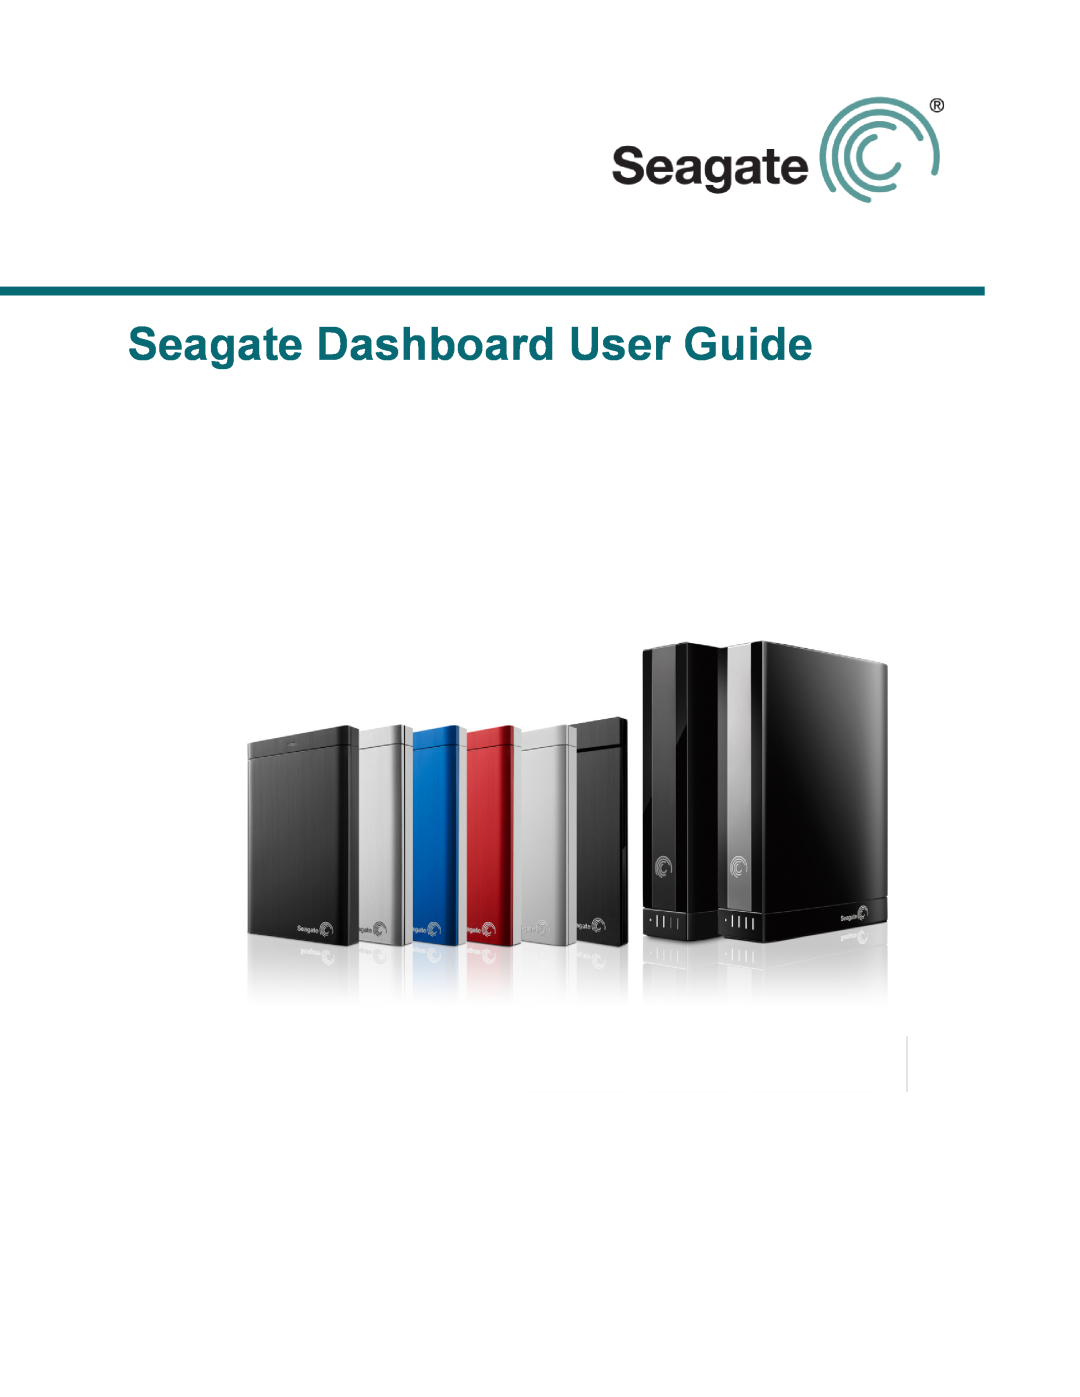 Seagate STCB3000900, STCB4000102, STCB3000100, STCB2000900, STCB2000100, STCA4000100 manual Seagate Dashboard User Guide 